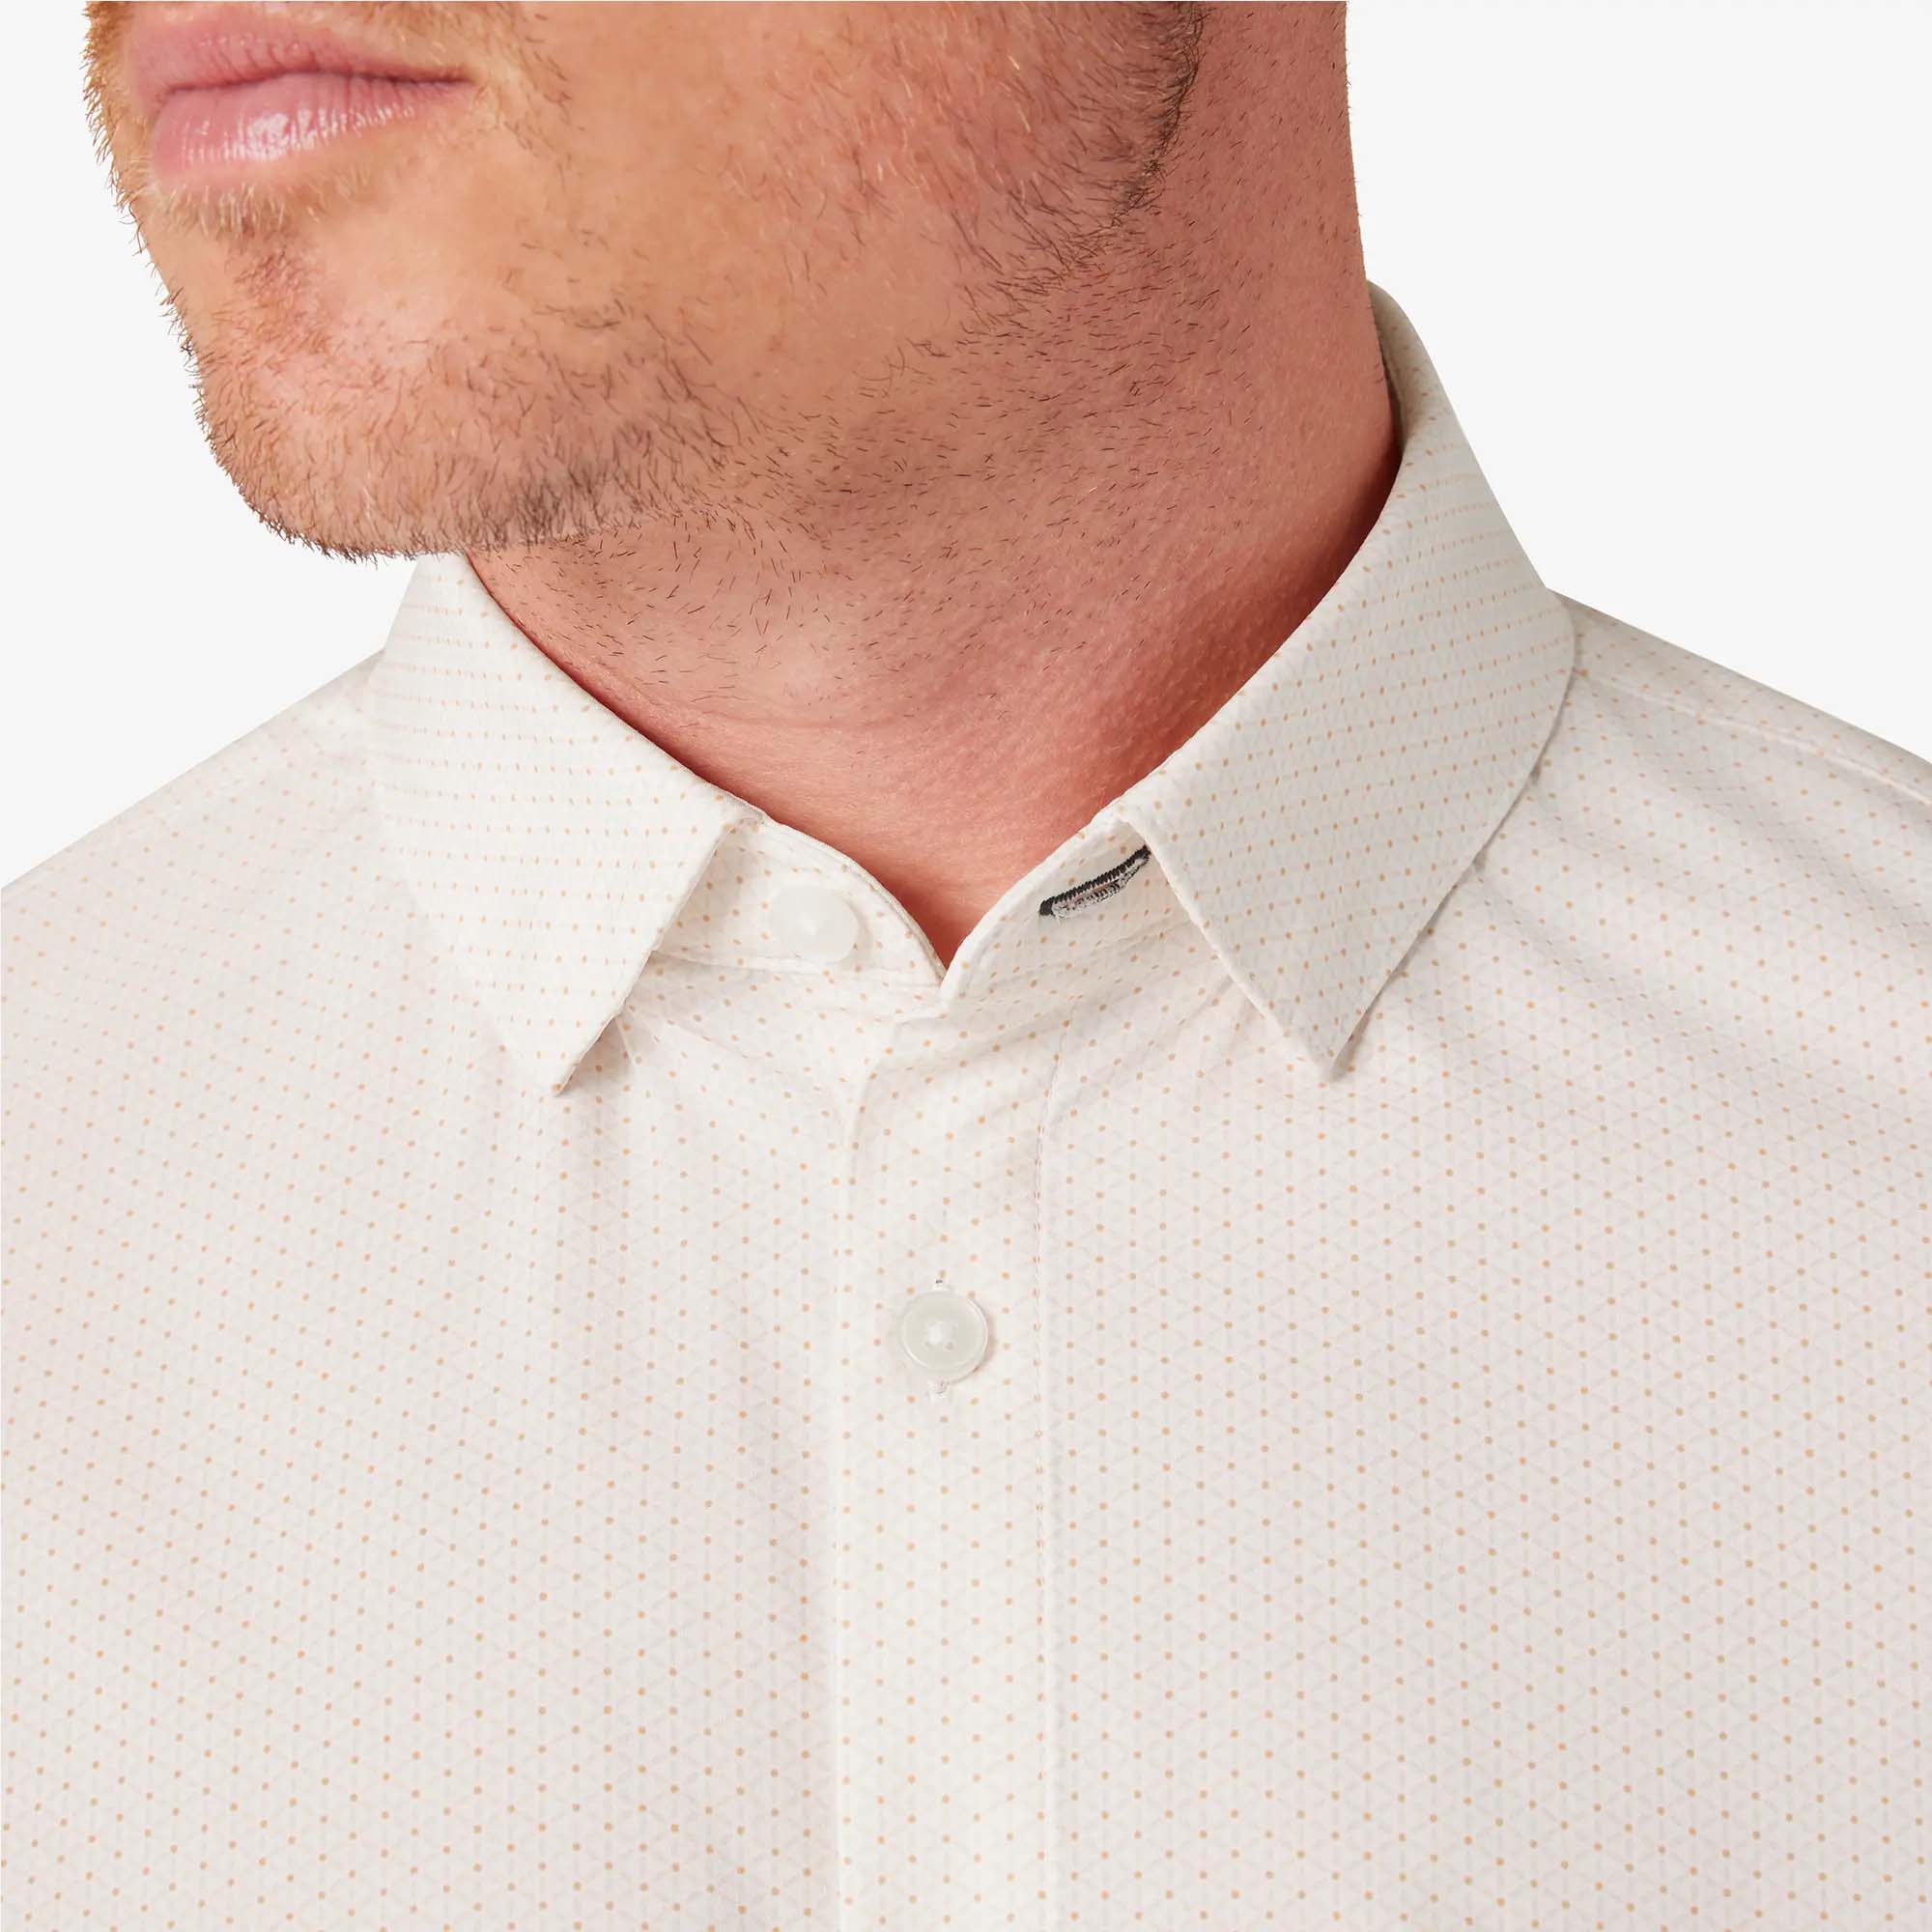 Peach Triangle Short Sleeve Shirt MIzzen and Main 